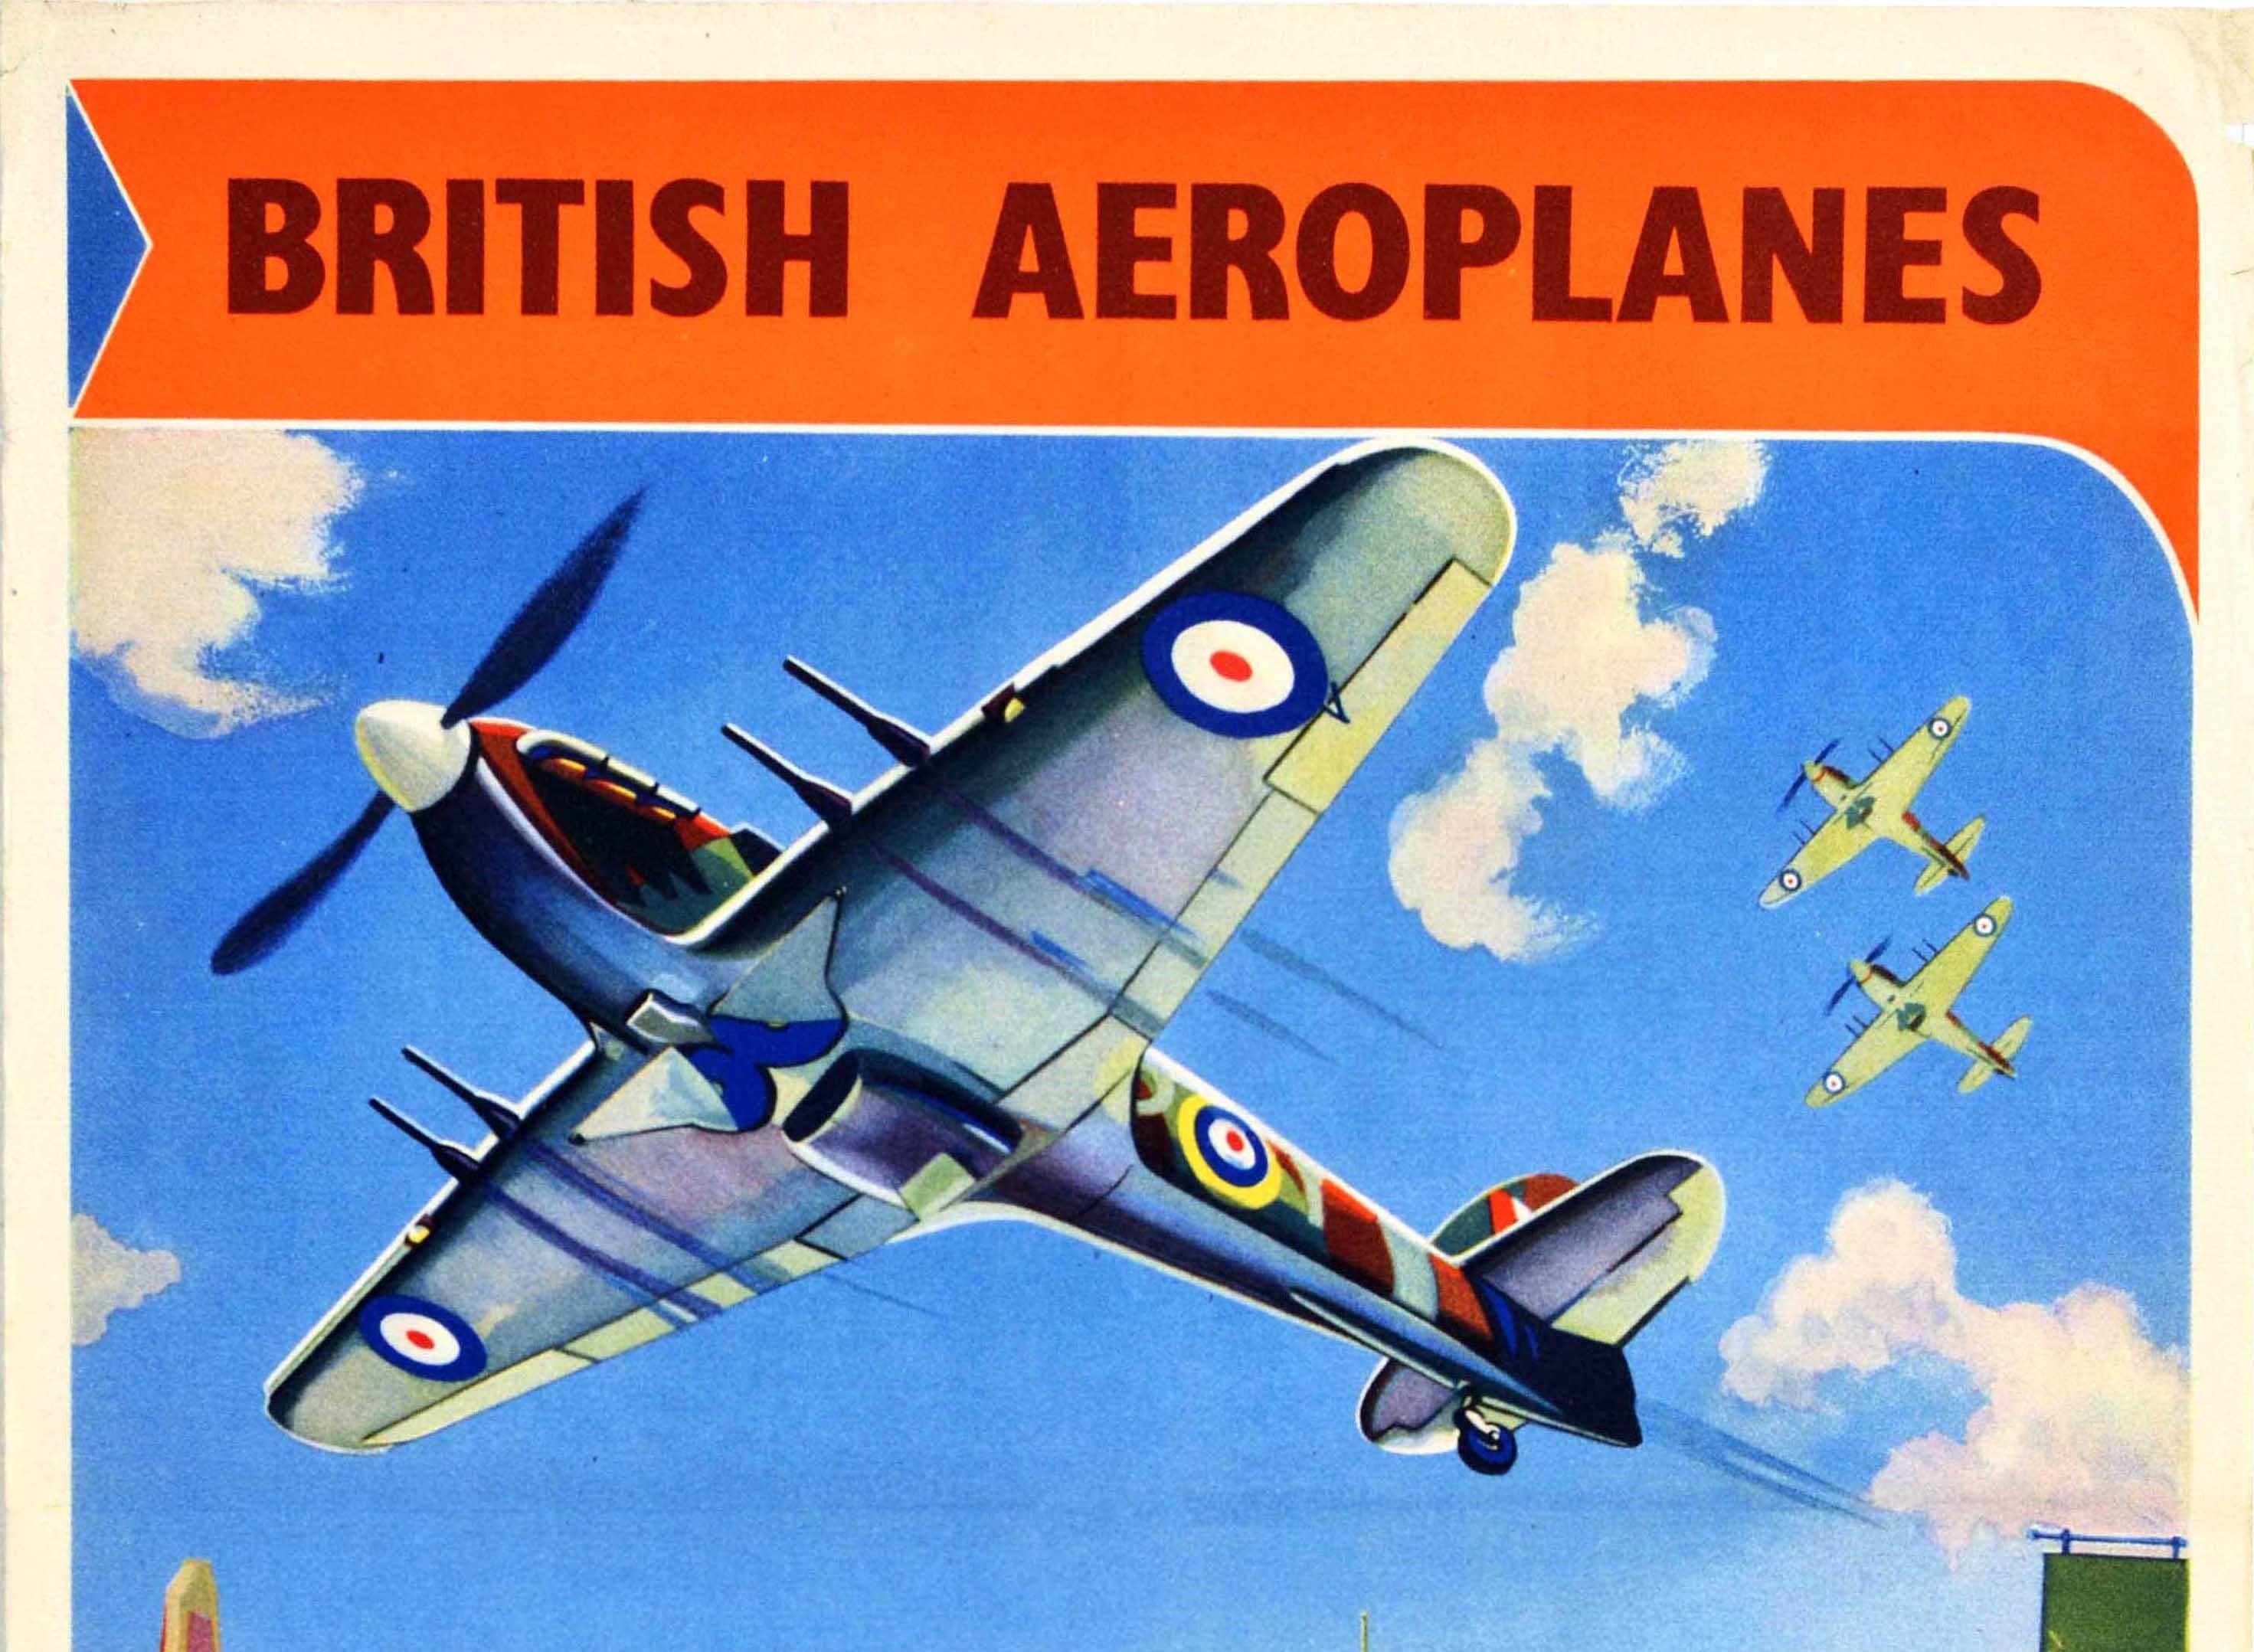 Original Vintage WWII Poster British Aeroplanes Guard African Skies RAF Spitfire - Print by Unknown